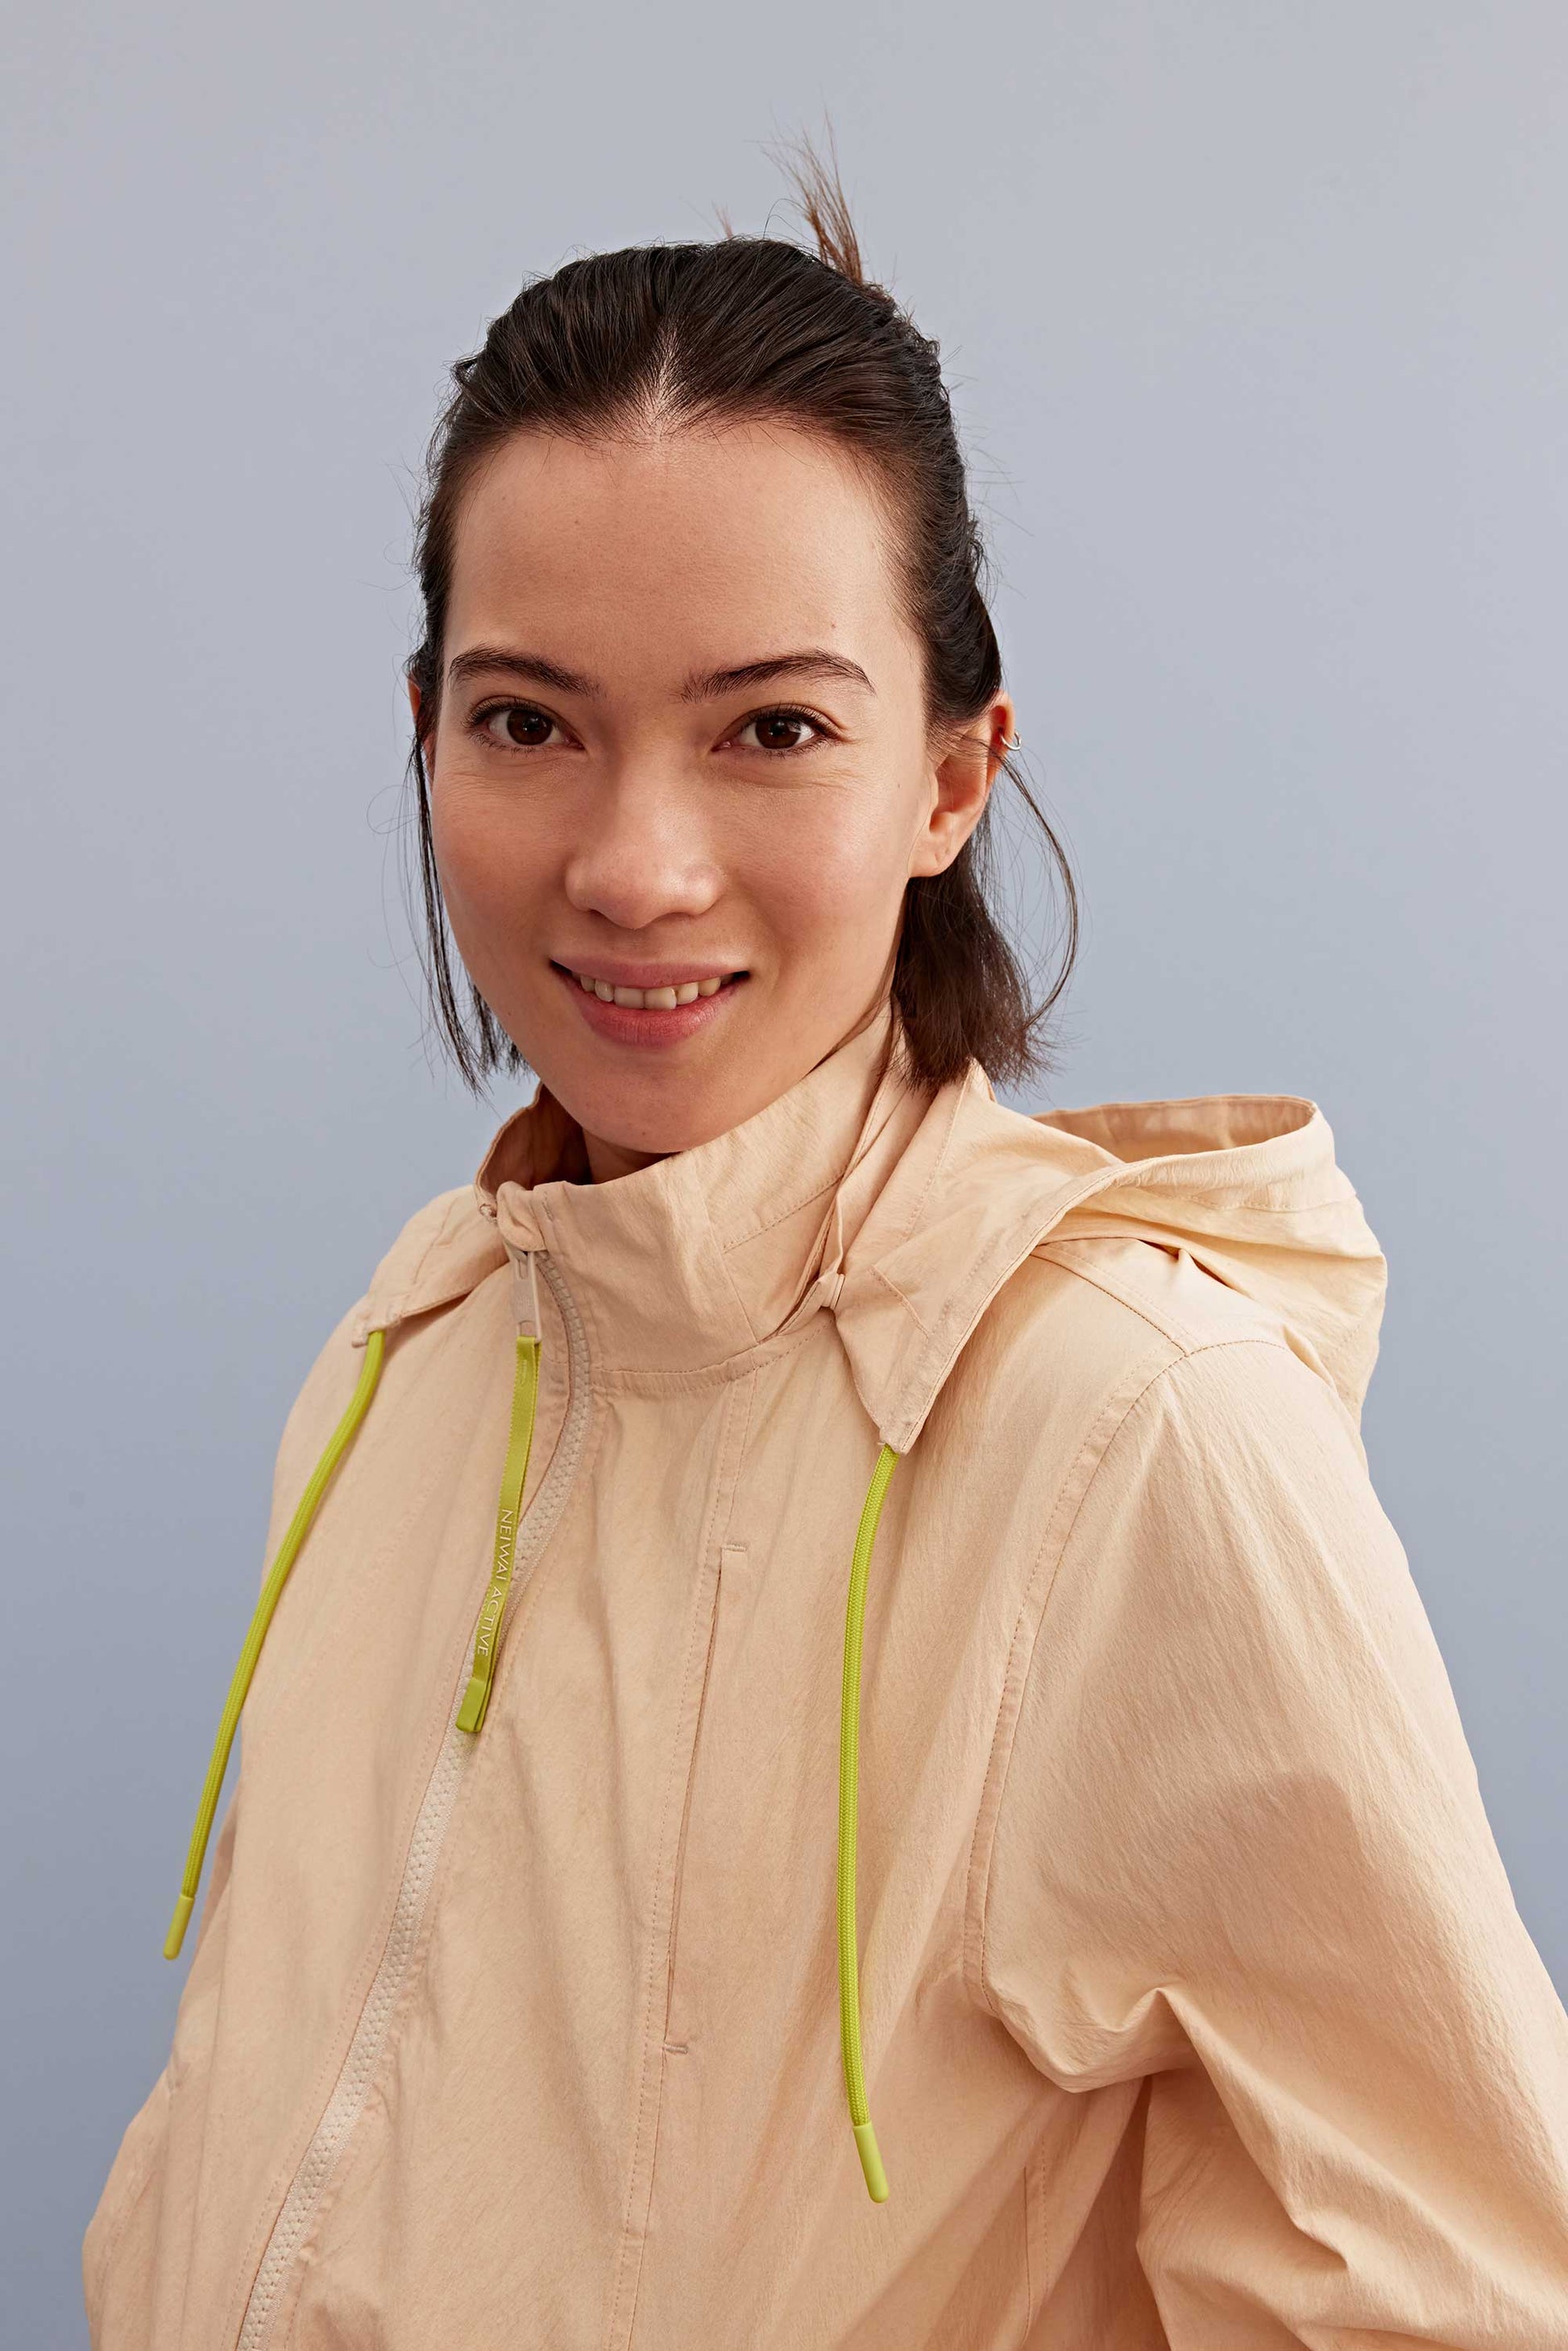 a woman smile wearing a warm yellow jacket